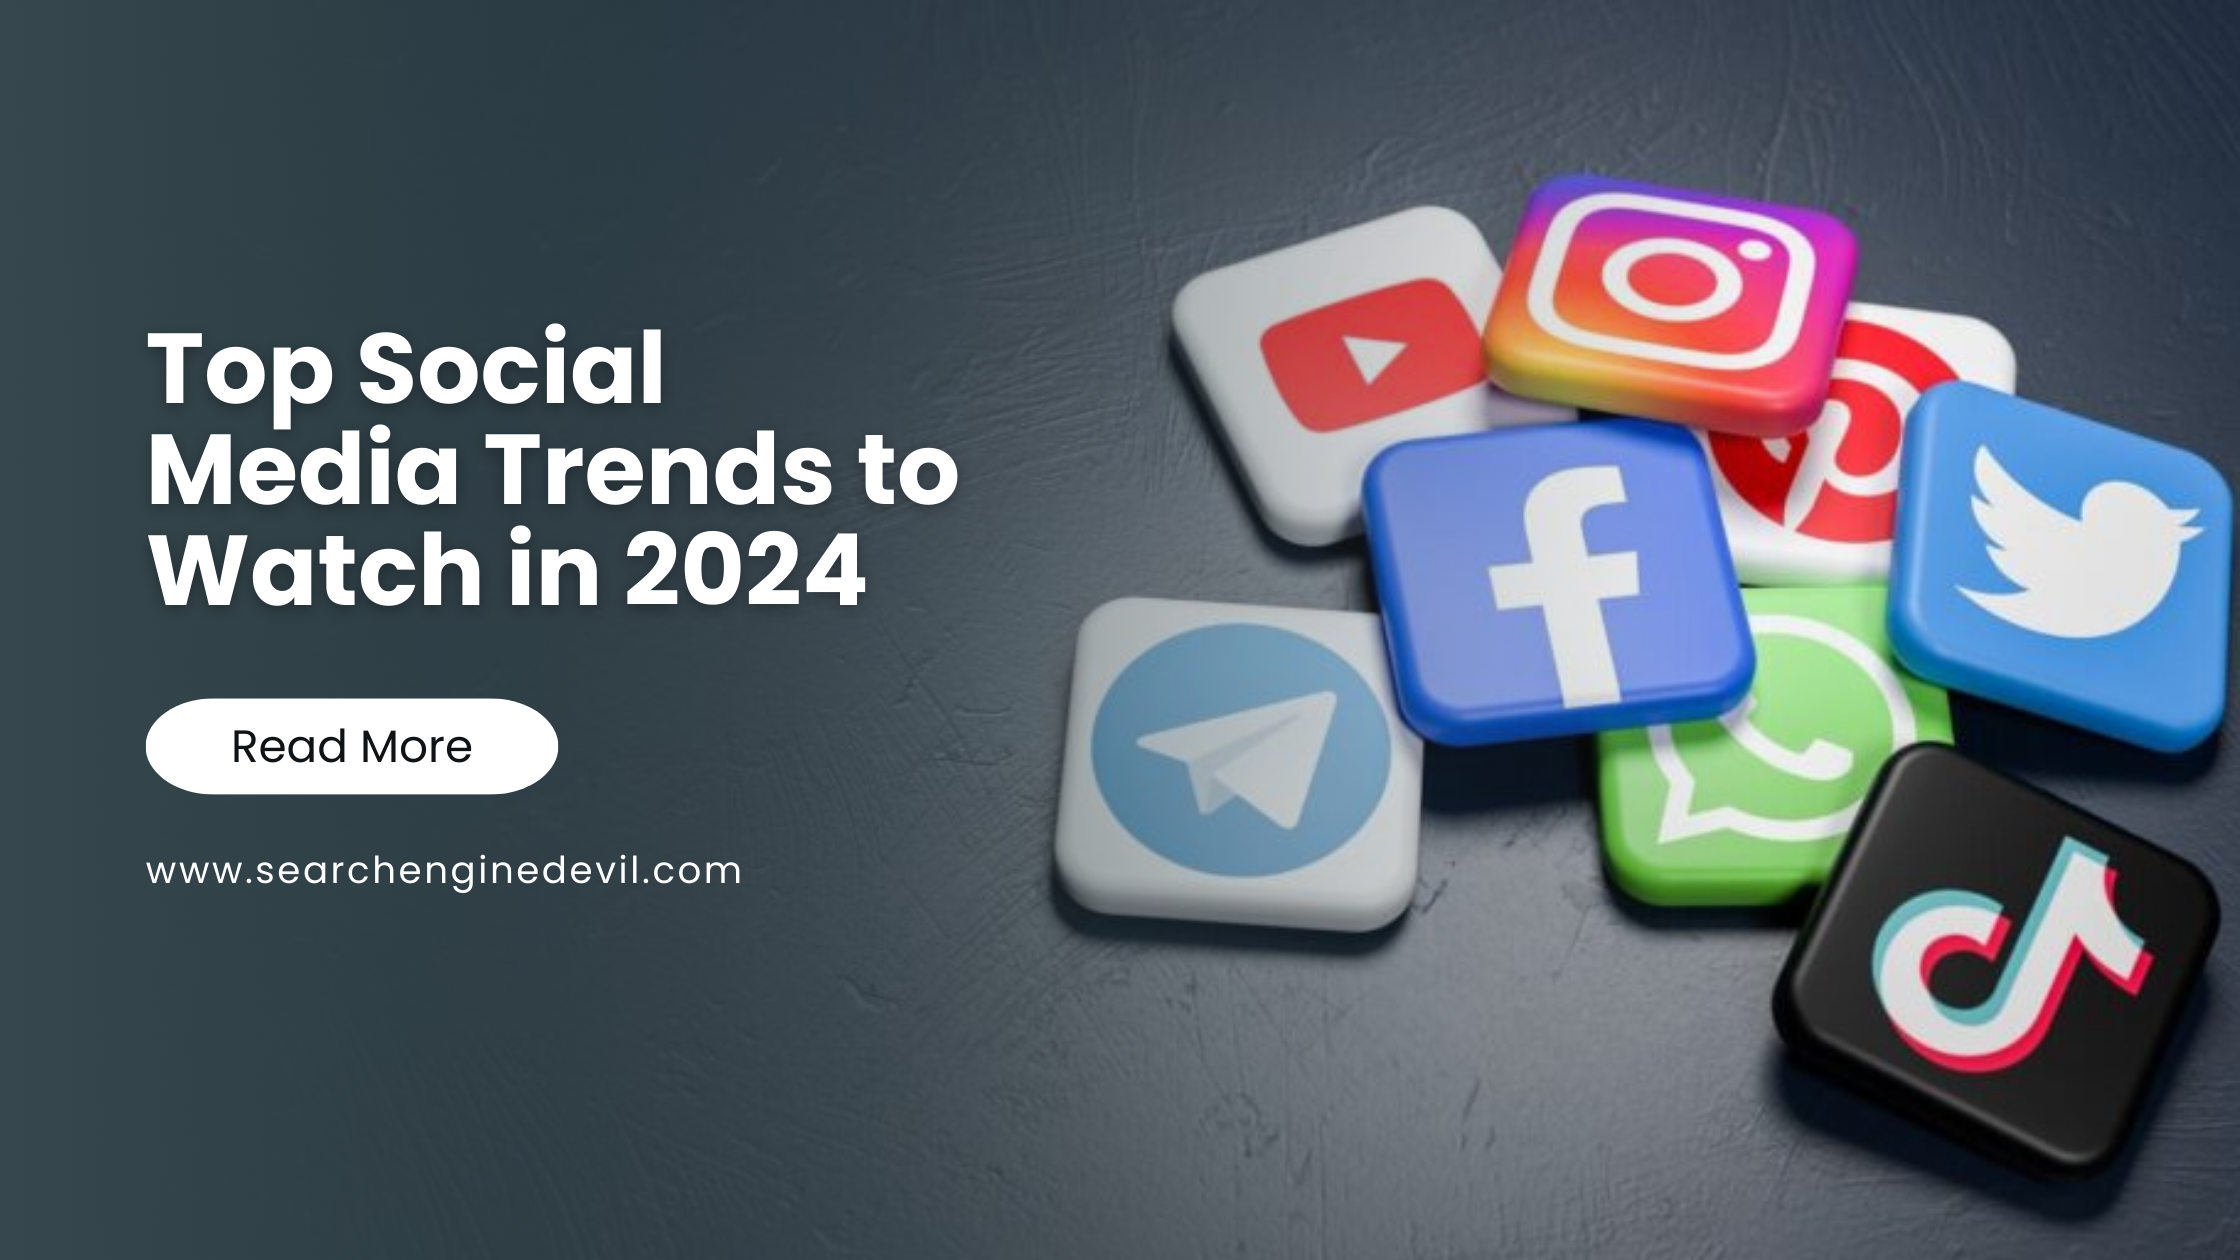 Top Social Media Trends to Watch in 2024